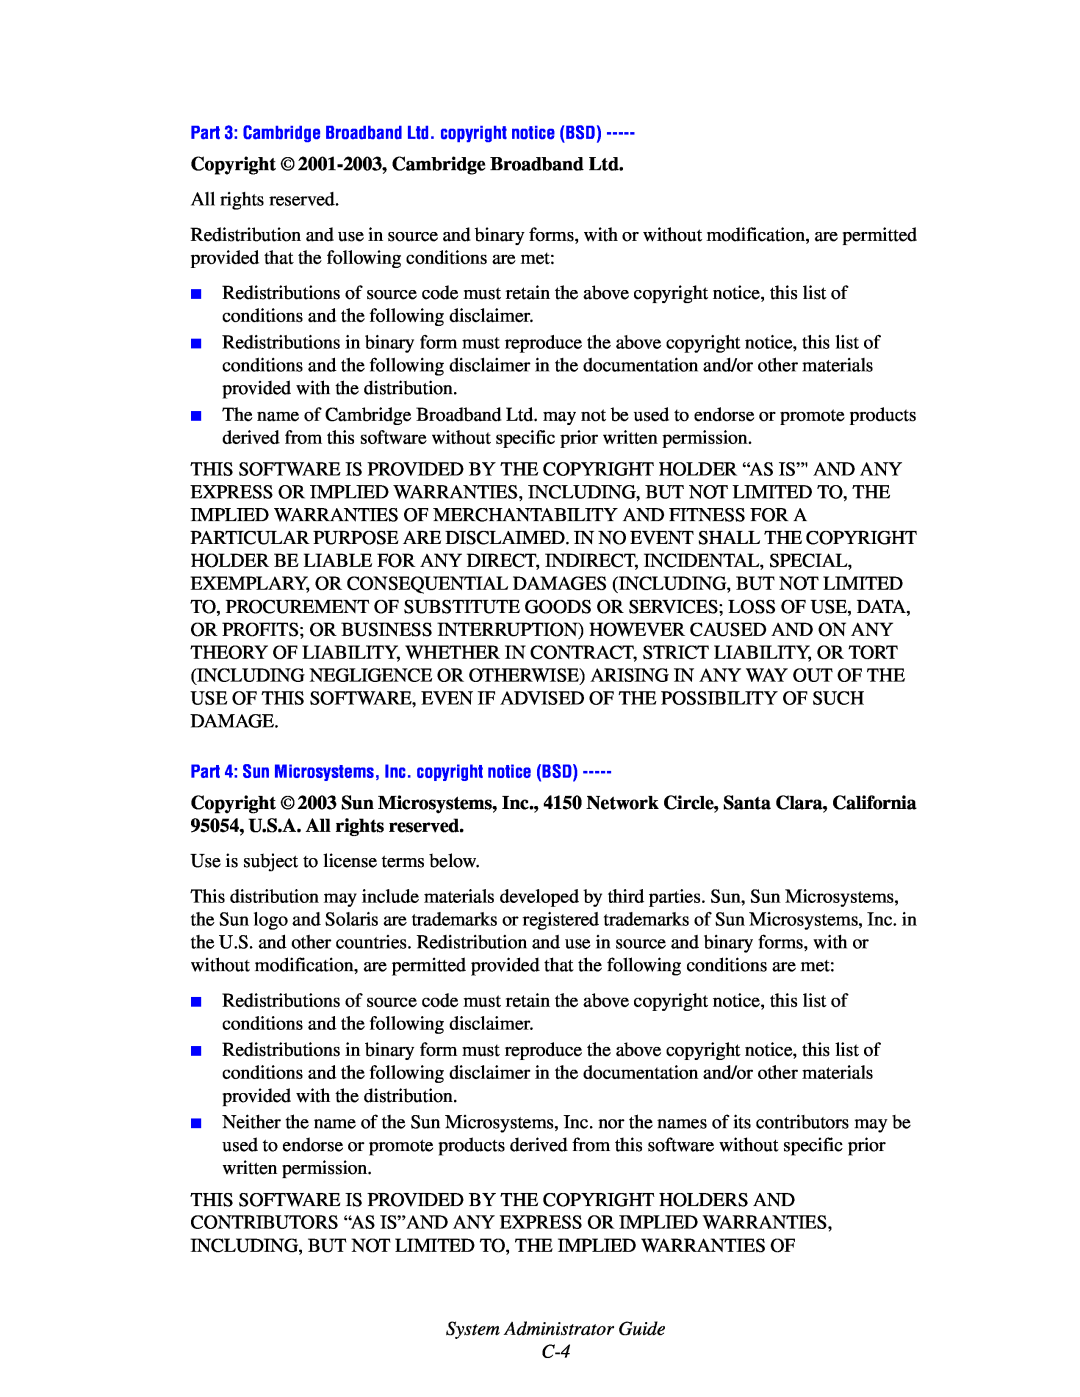 Xerox 1235/DX, 4510, 1235DT manual Copyright 2001-2003,Cambridge Broadband Ltd, System Administrator Guide C-4 